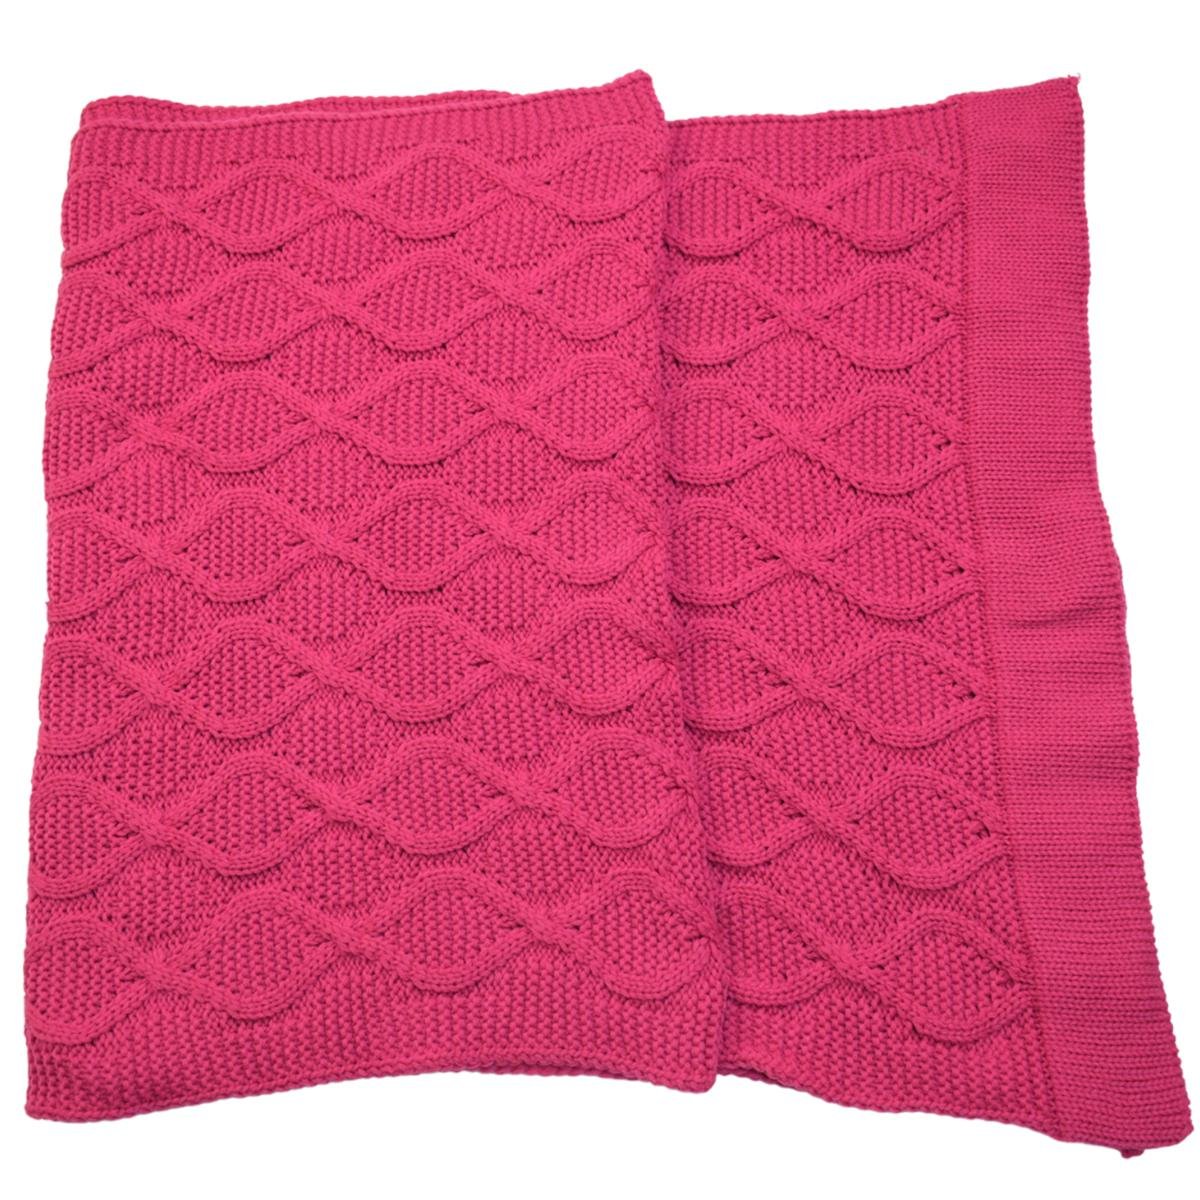 Peseira de tricot cama Queen 60 x 220cm arabescos Rosa Pink - 4